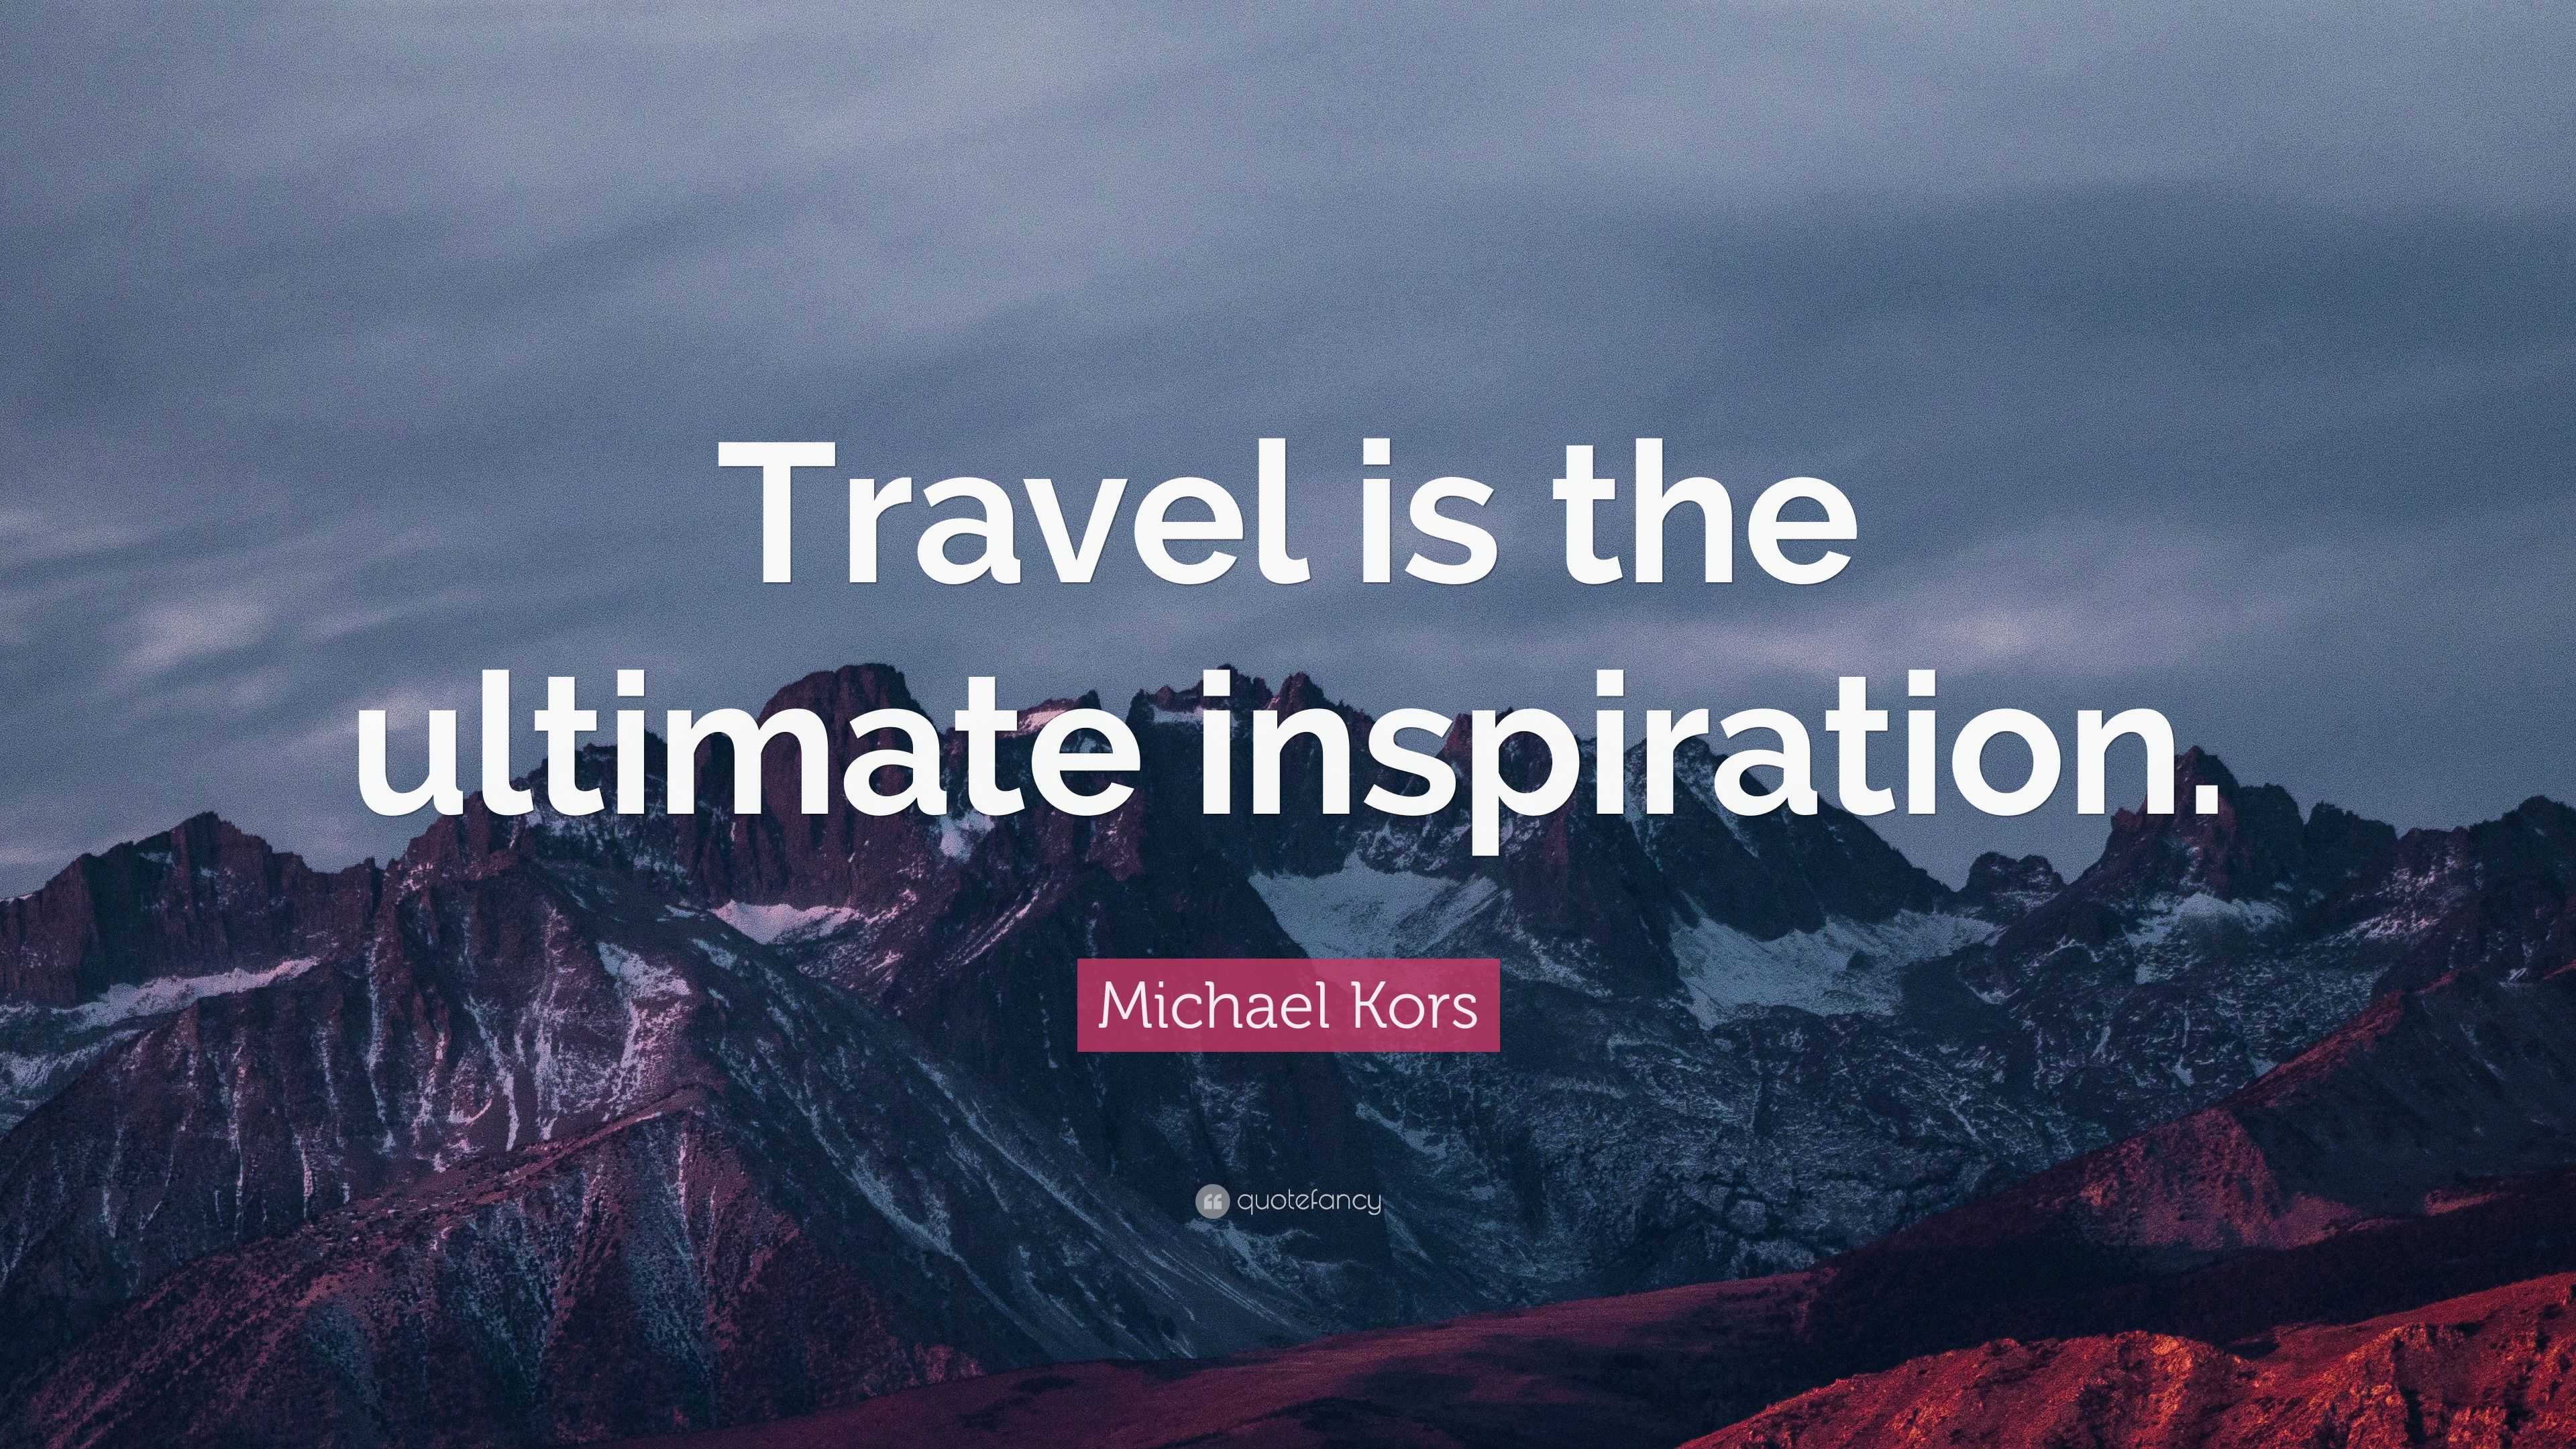 Michael Kors, Inspiration